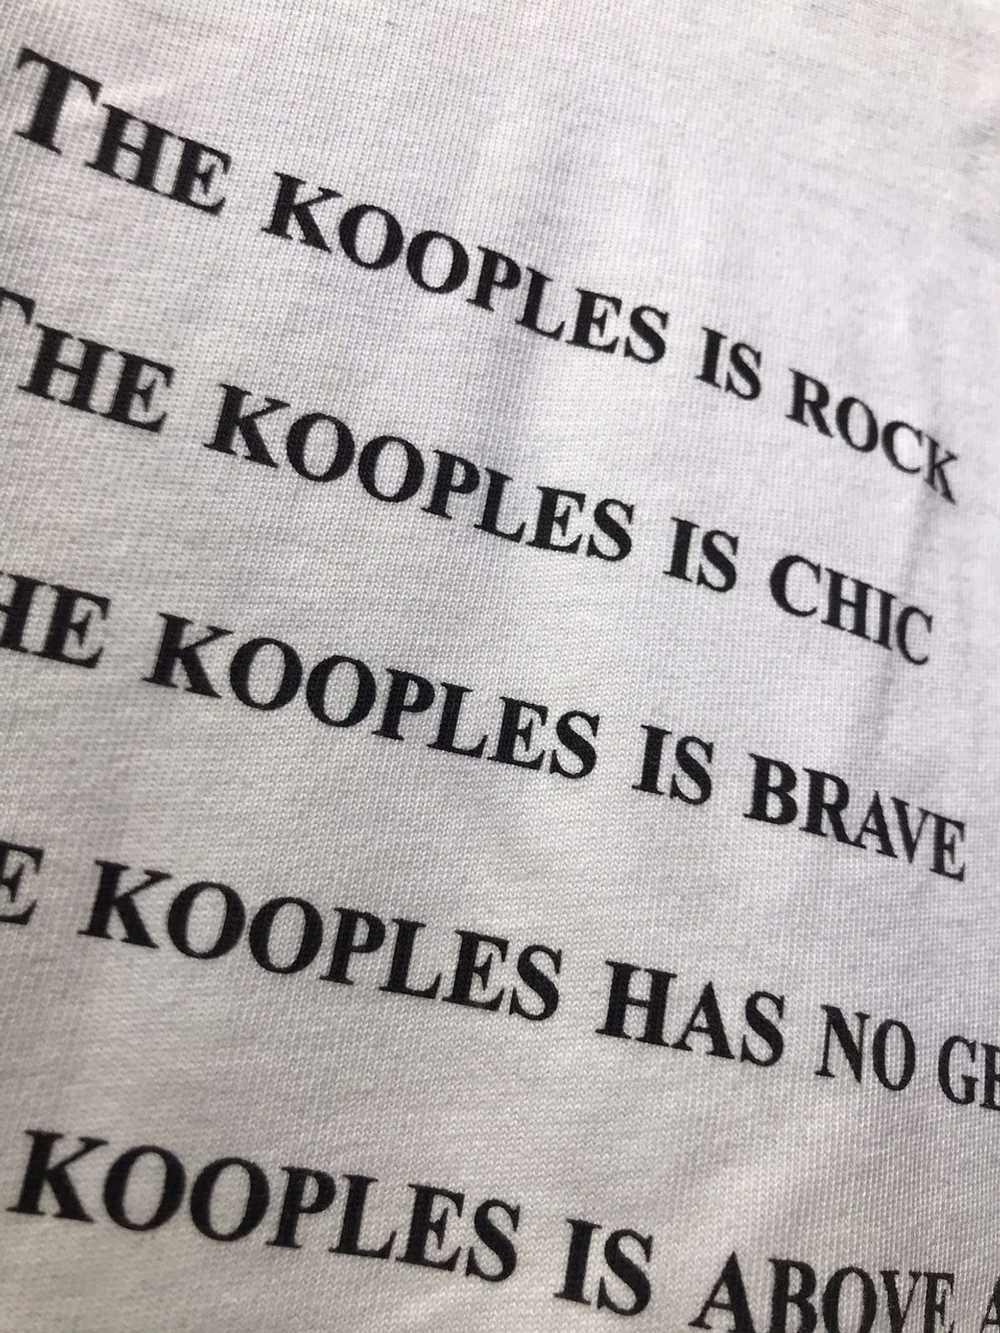 The Kooples T shirt The Kooples Paris white size s - image 6